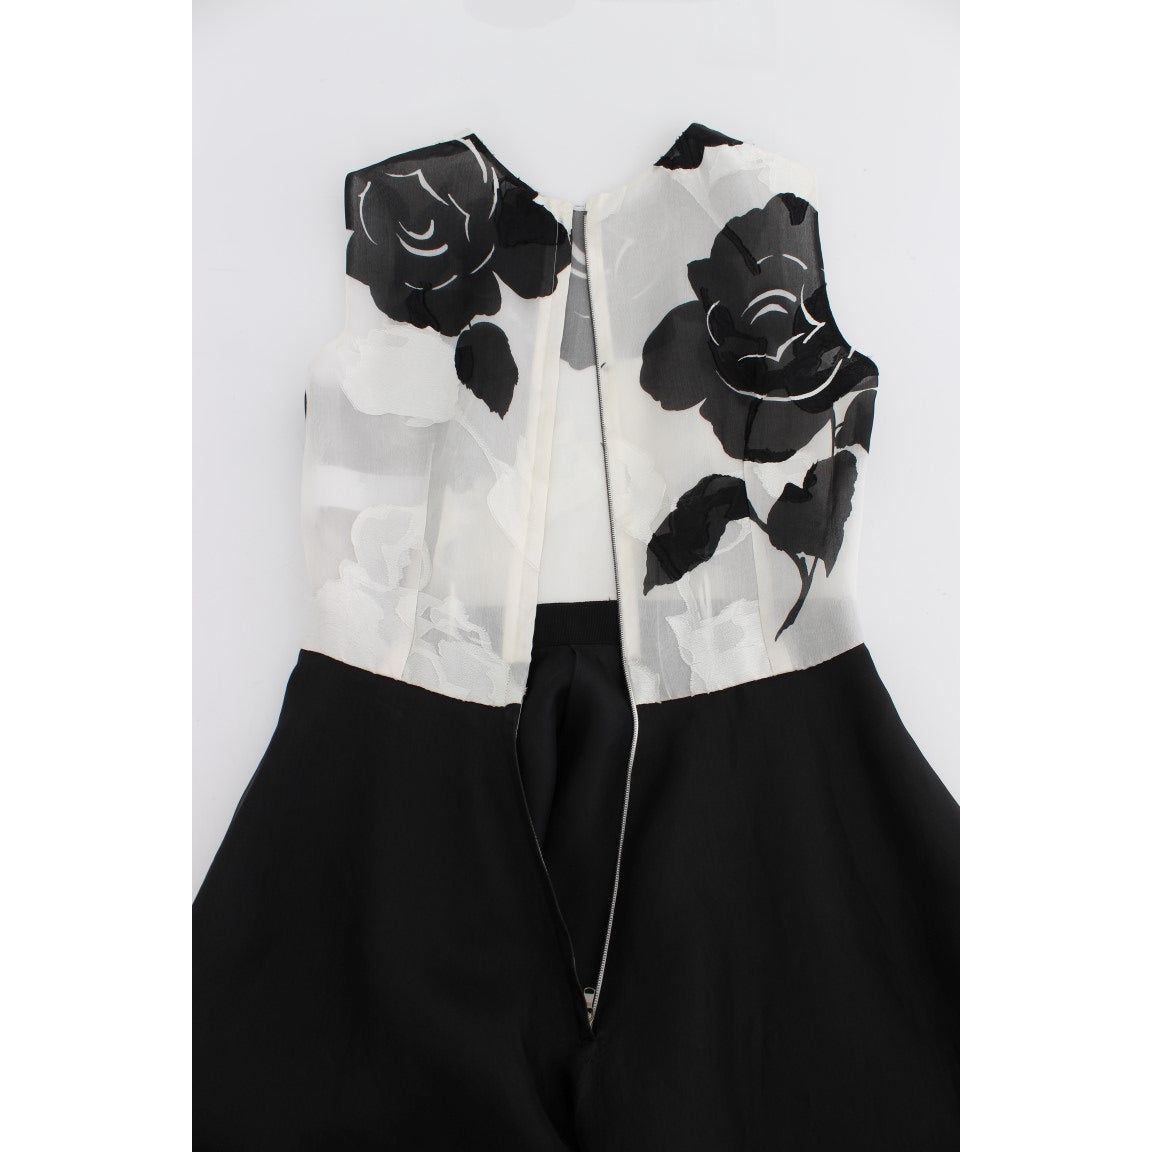 Dolce & Gabbana Elegant Floral Silk Full Length Dress black-white-floral-silk-sheath-gown-dress 72716-black-white-floral-silk-sheath-gown-dress-5.jpg